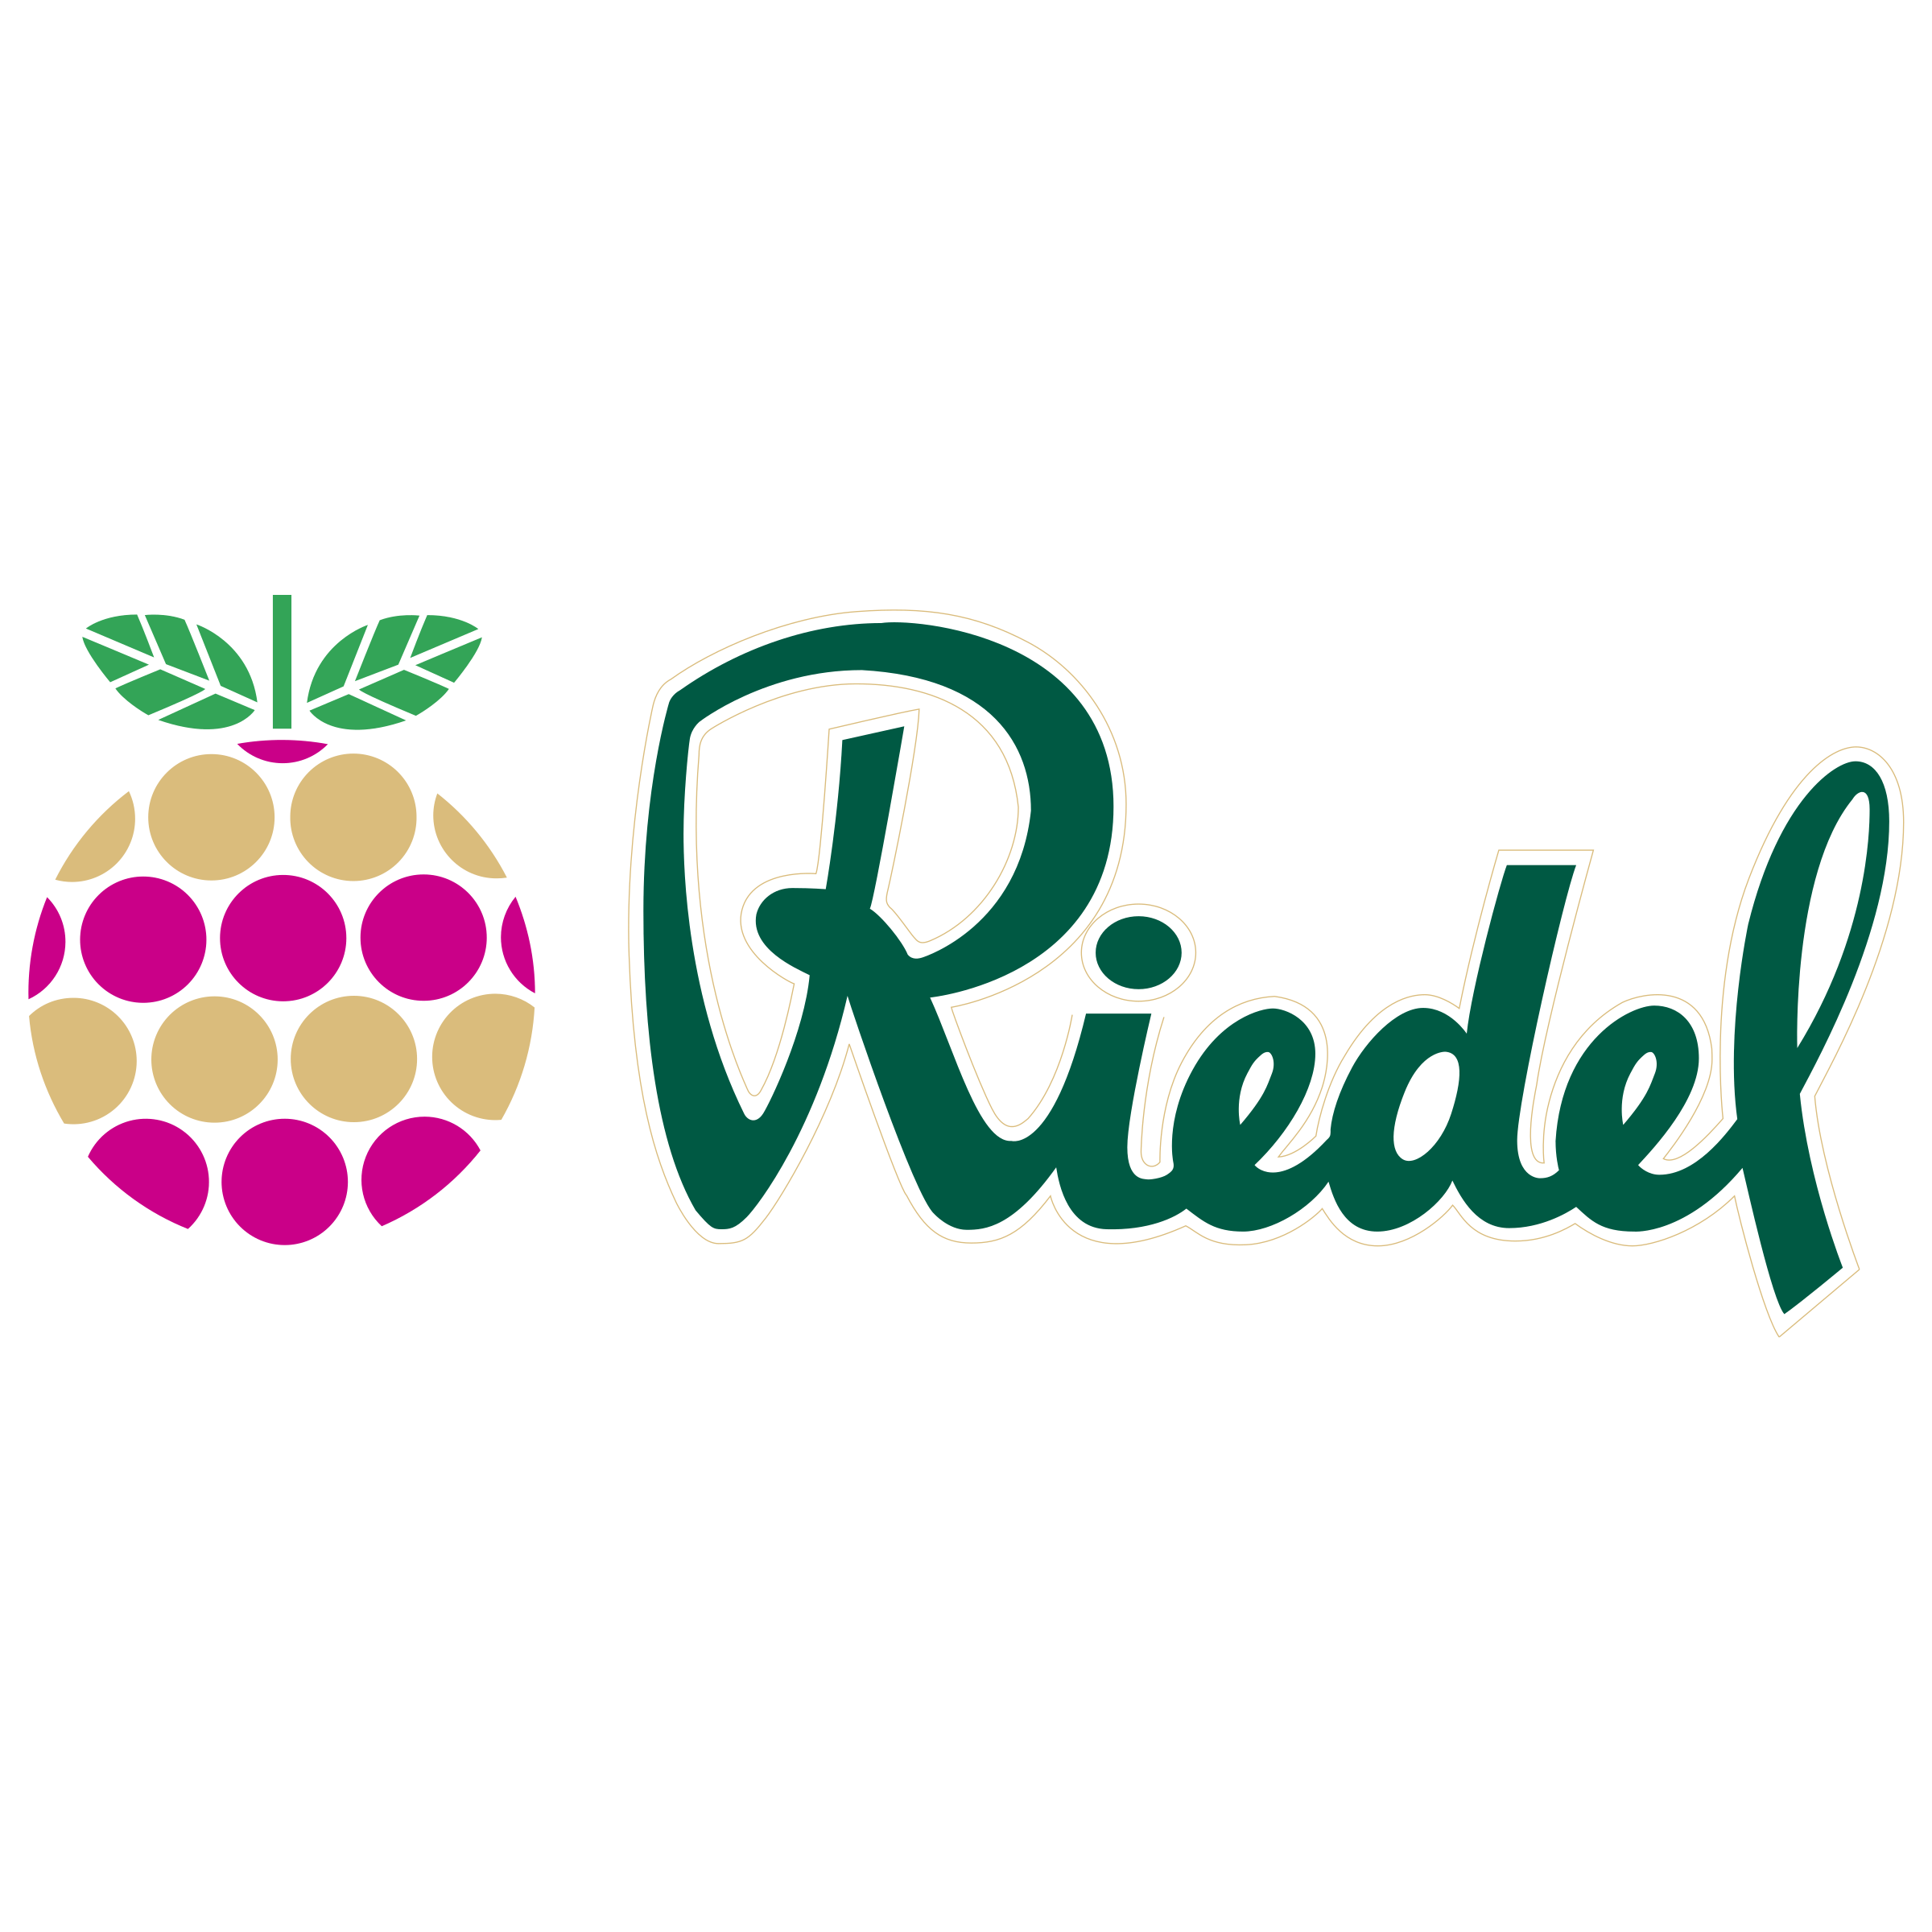 Riedel Logo - Riedel Logo PNG Transparent & SVG Vector - Freebie Supply